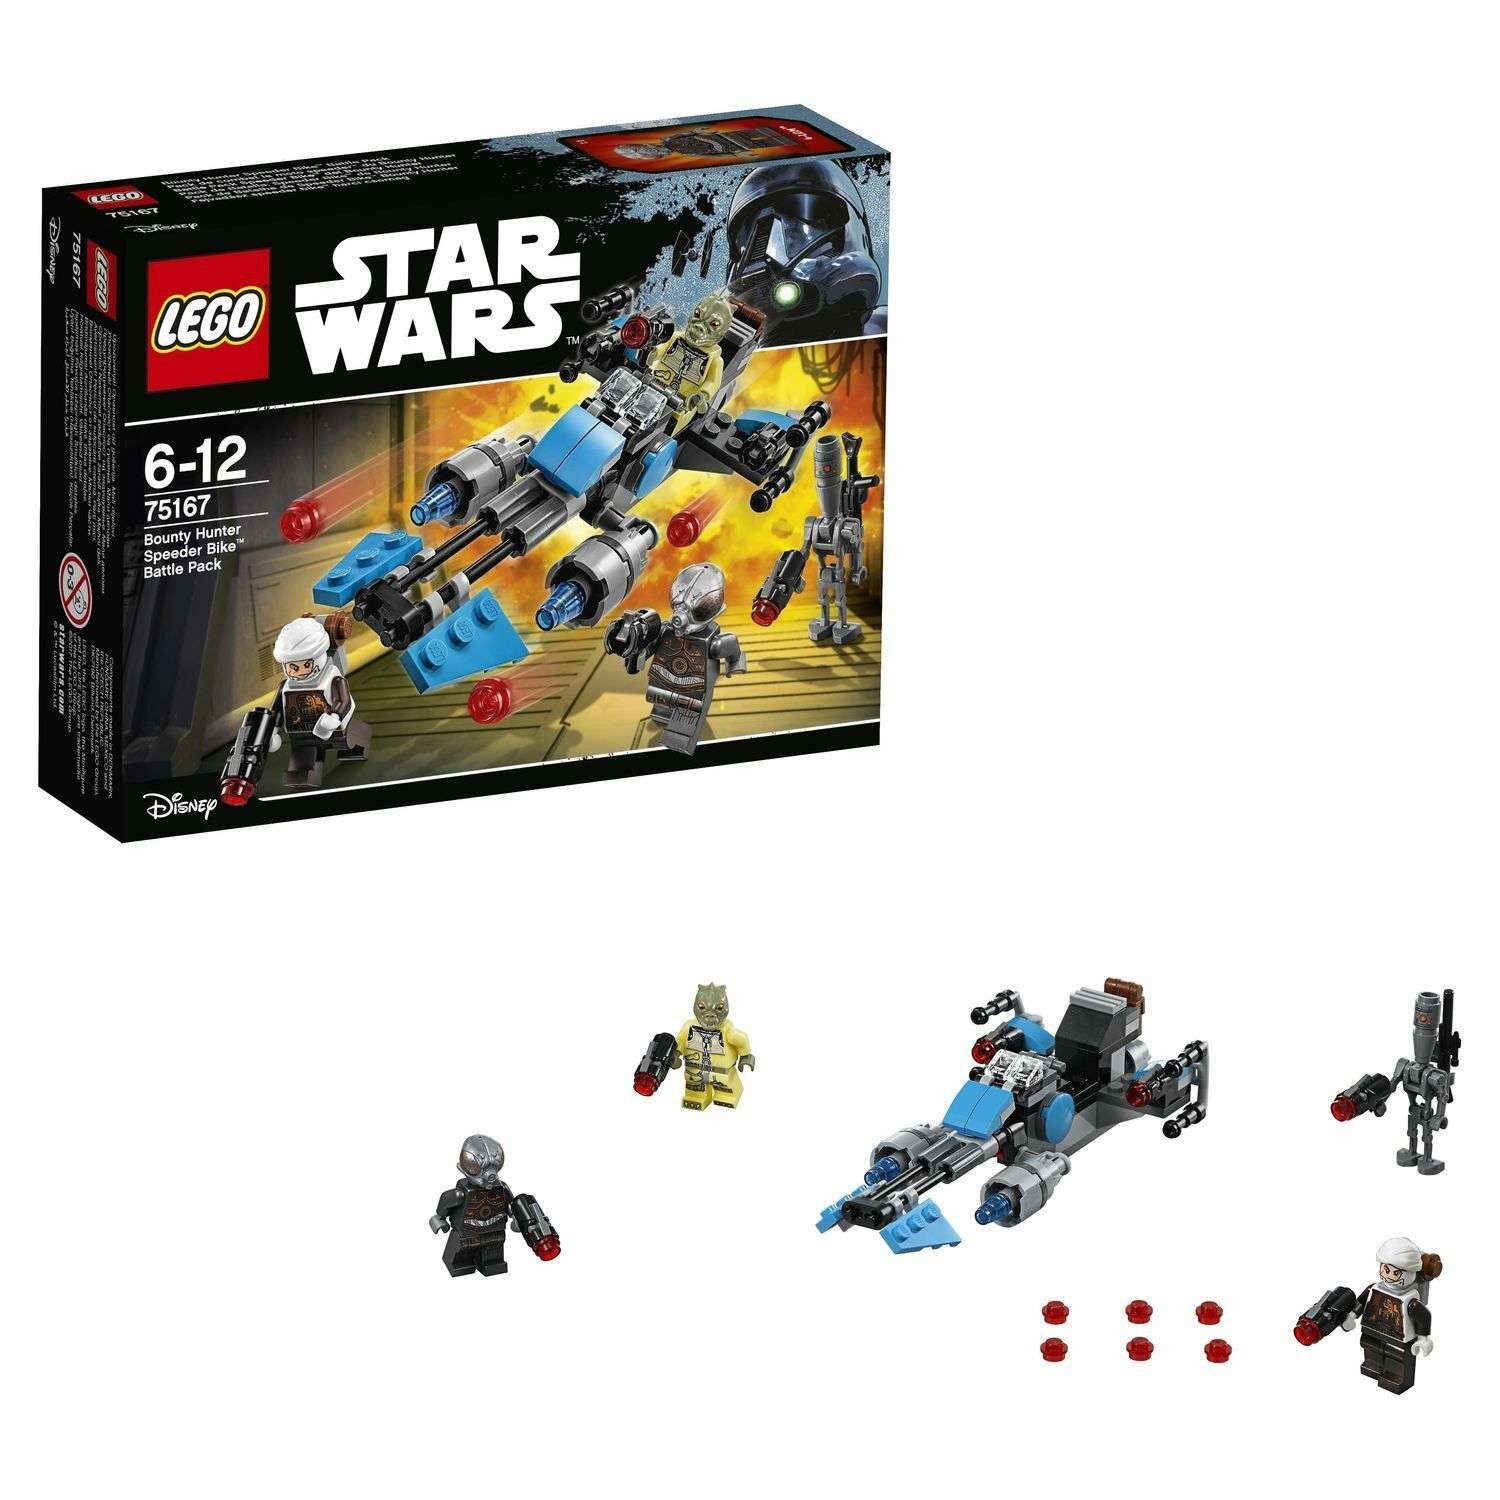 Конструктор LEGO Star Wars TM Спидер охотников за головами (75167) - фото 1